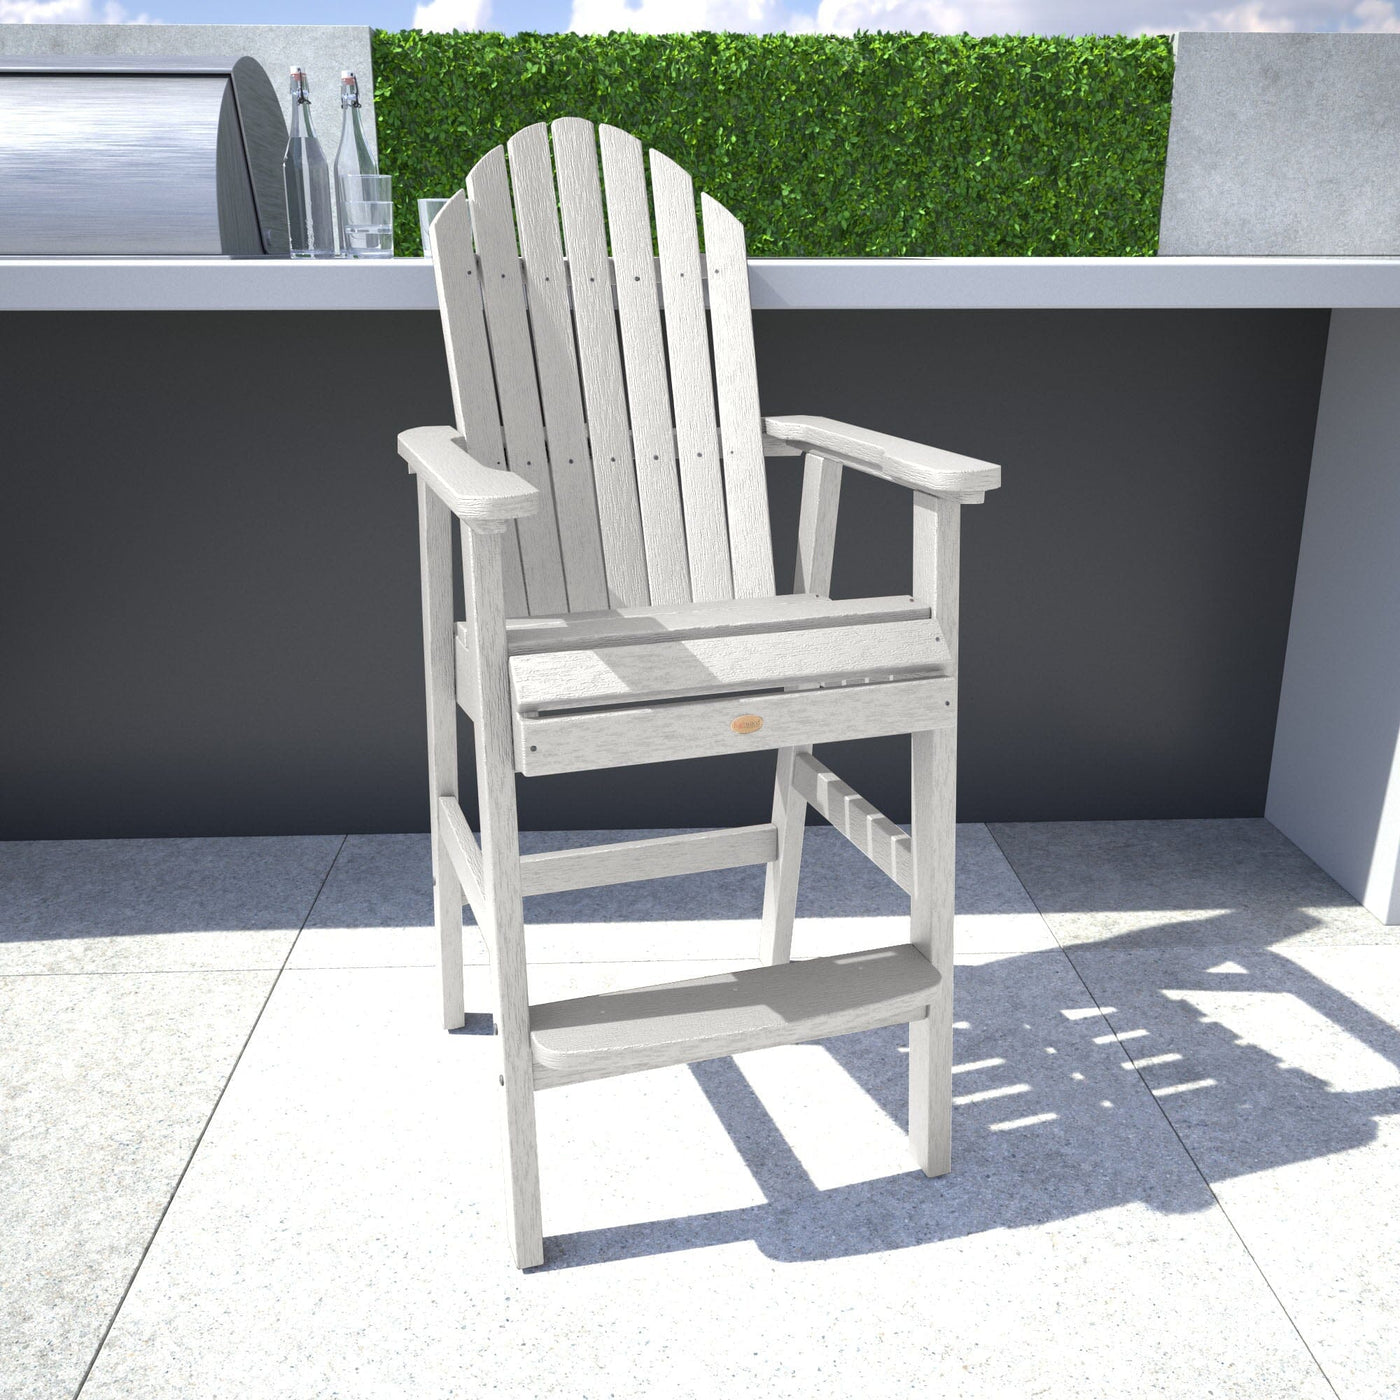 White Hamilton Bar Height Chair in outdoor kitchen